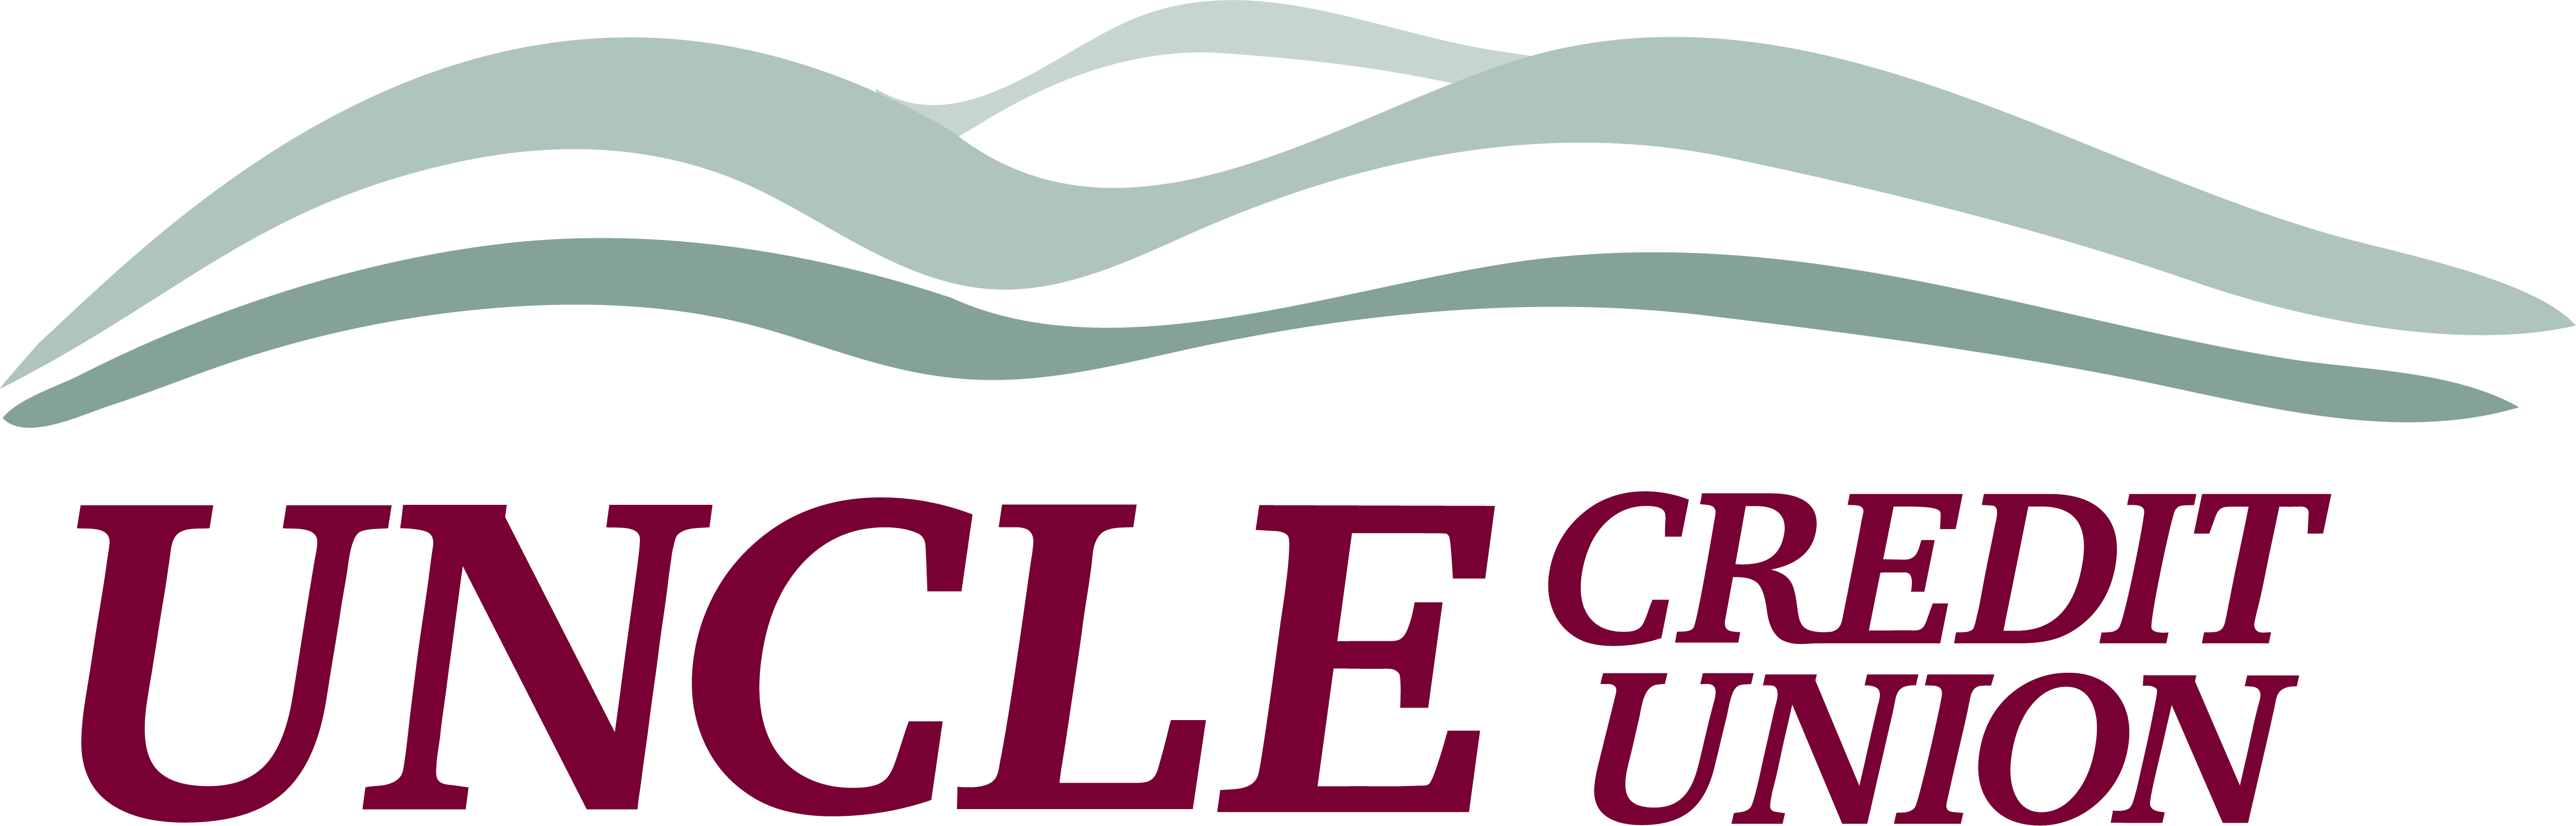 UNCLE_Logo_HiRes.png